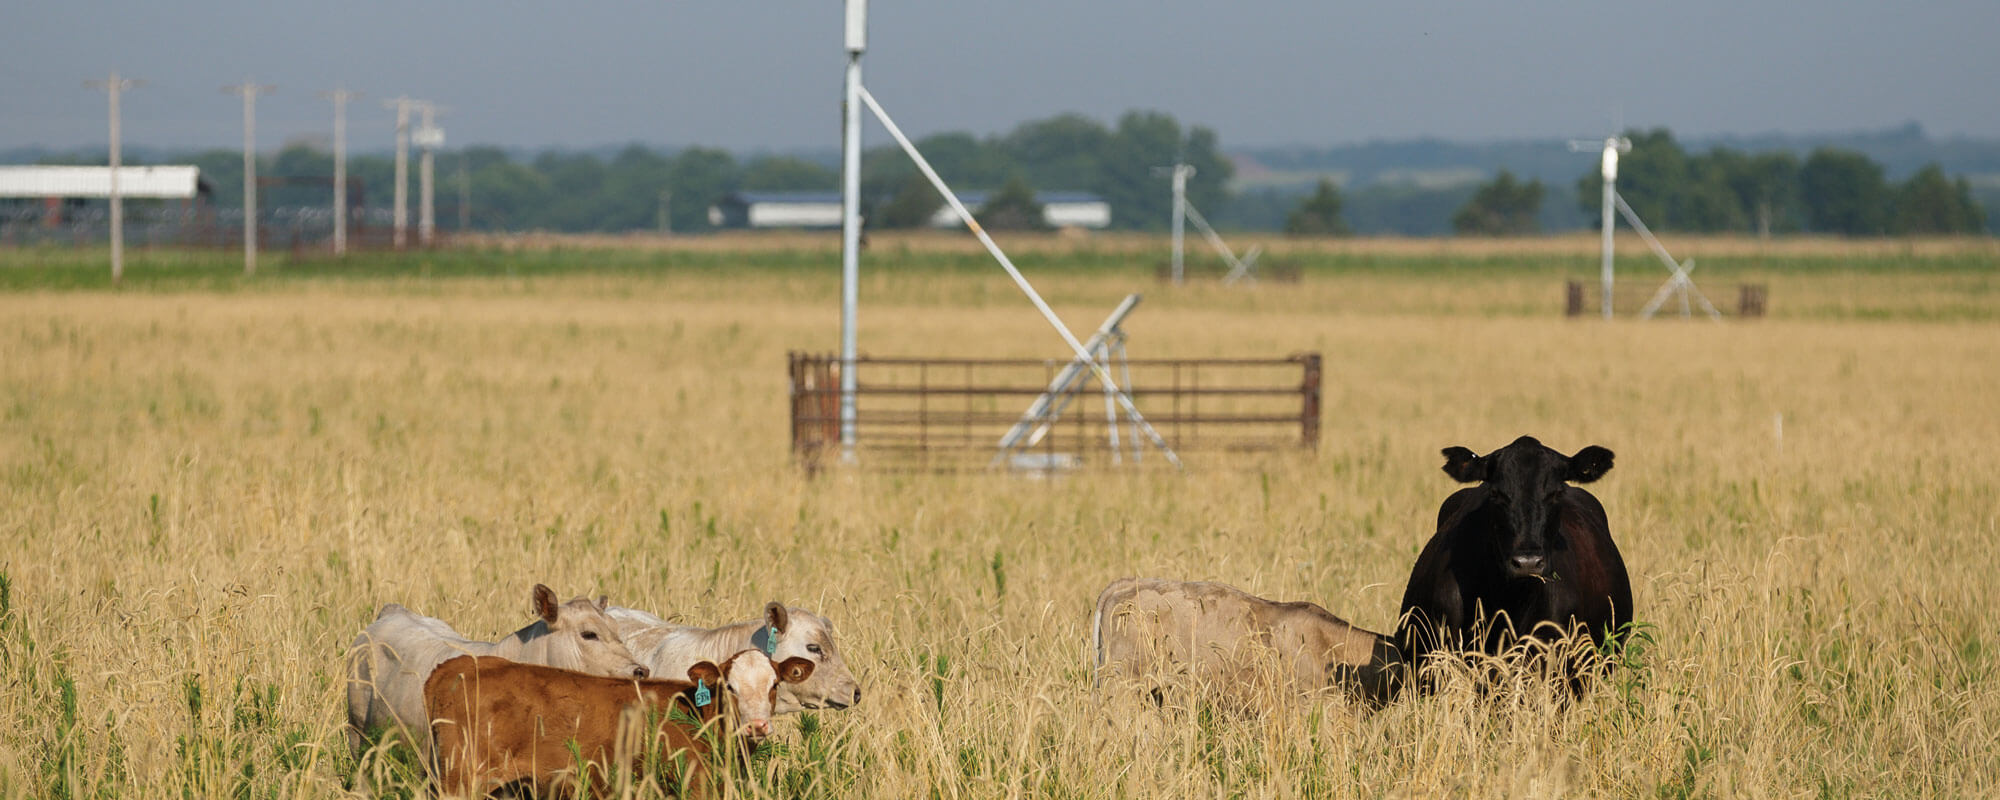 Cattle grazing near flux sensor towers